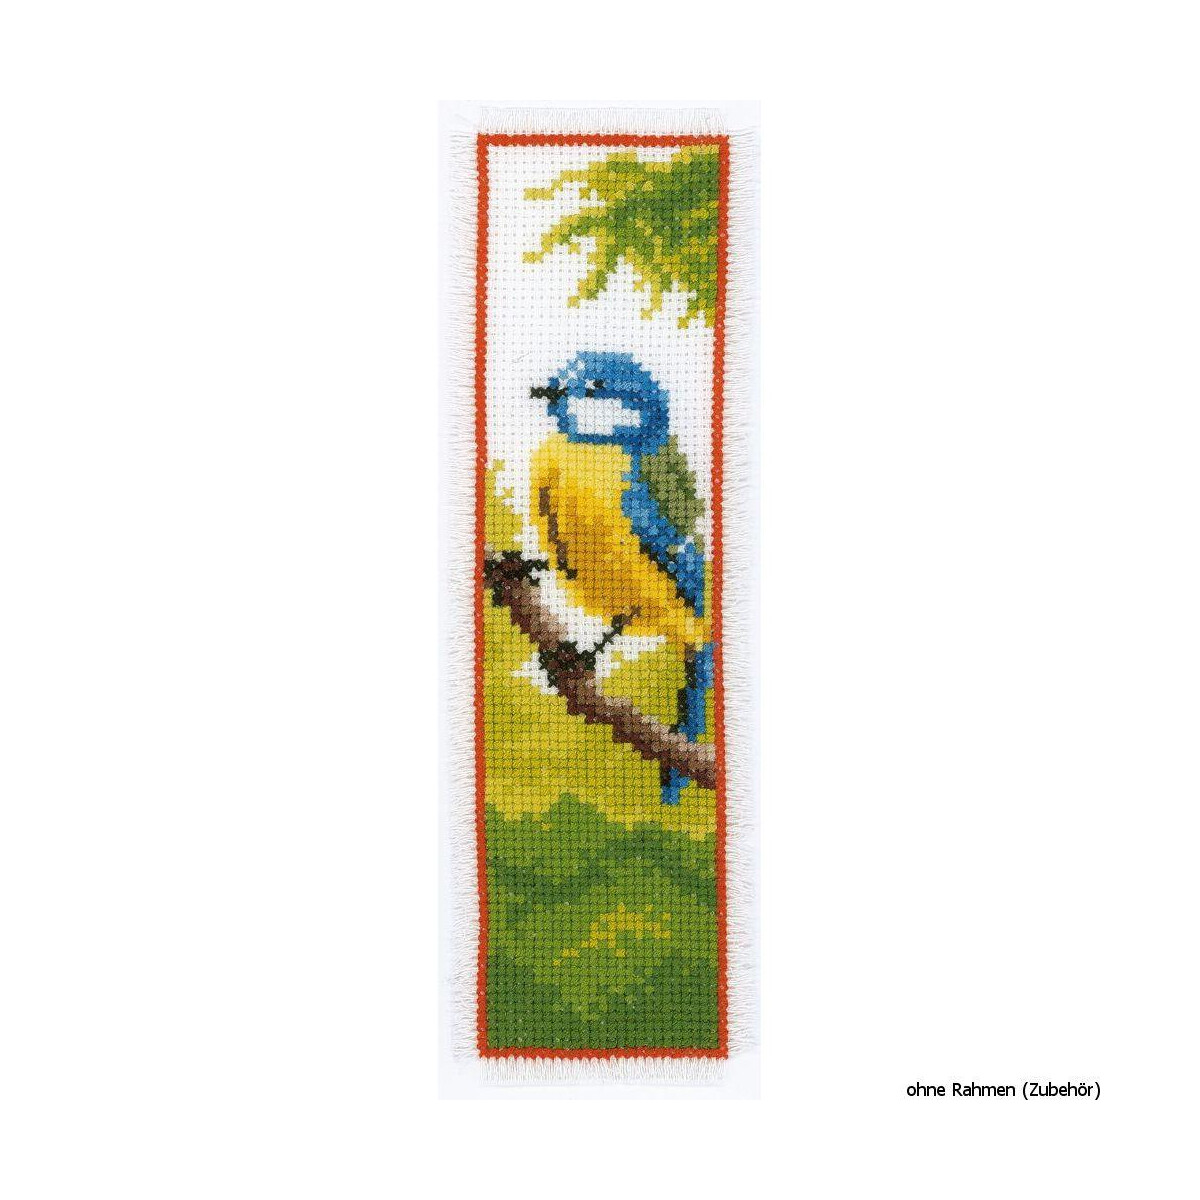 Vervaco Bookmark counted cross stitch kit Bird, DIY